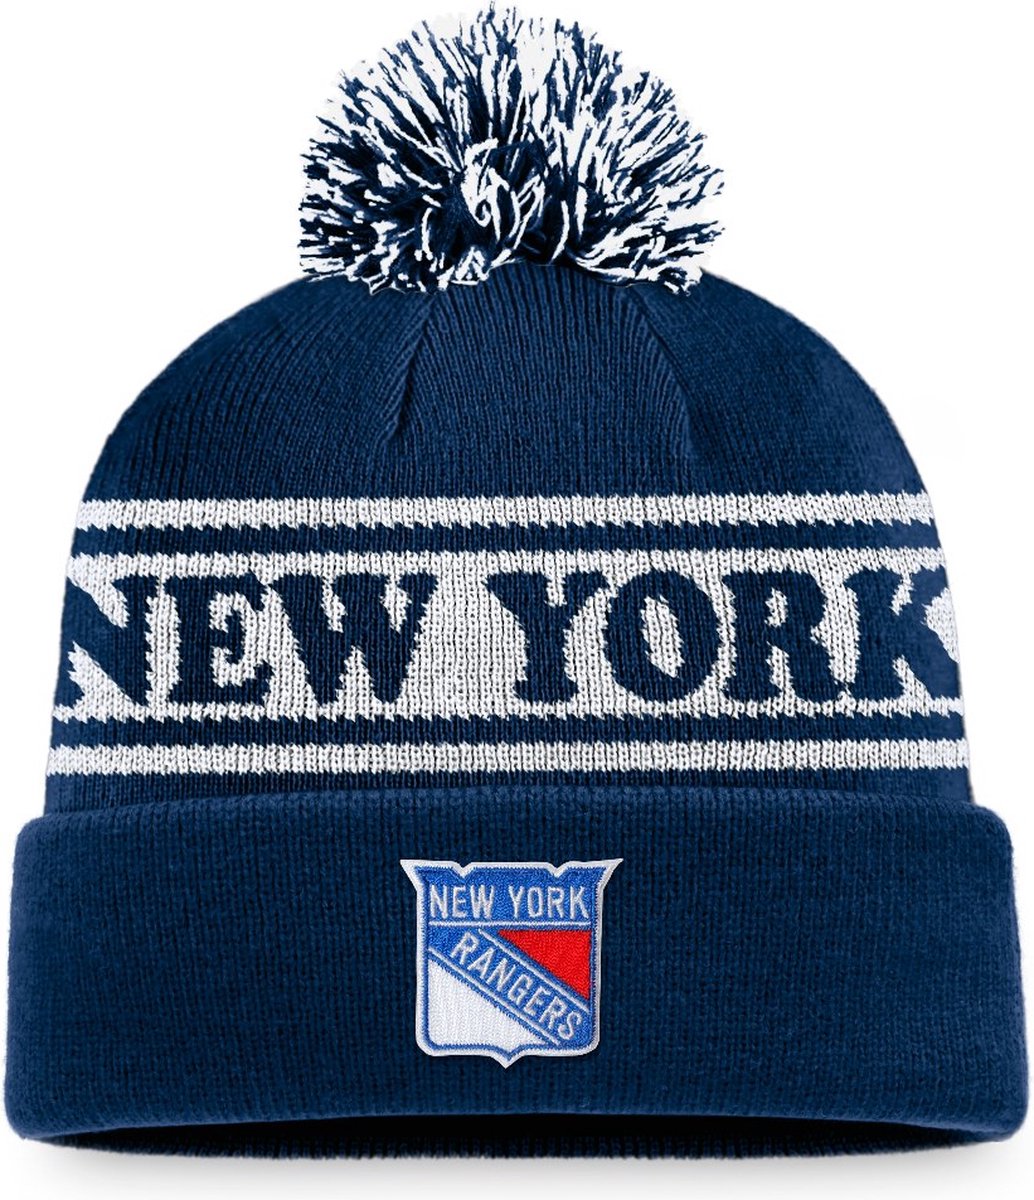 Fanatics Muts NHL New York Rangers - One size